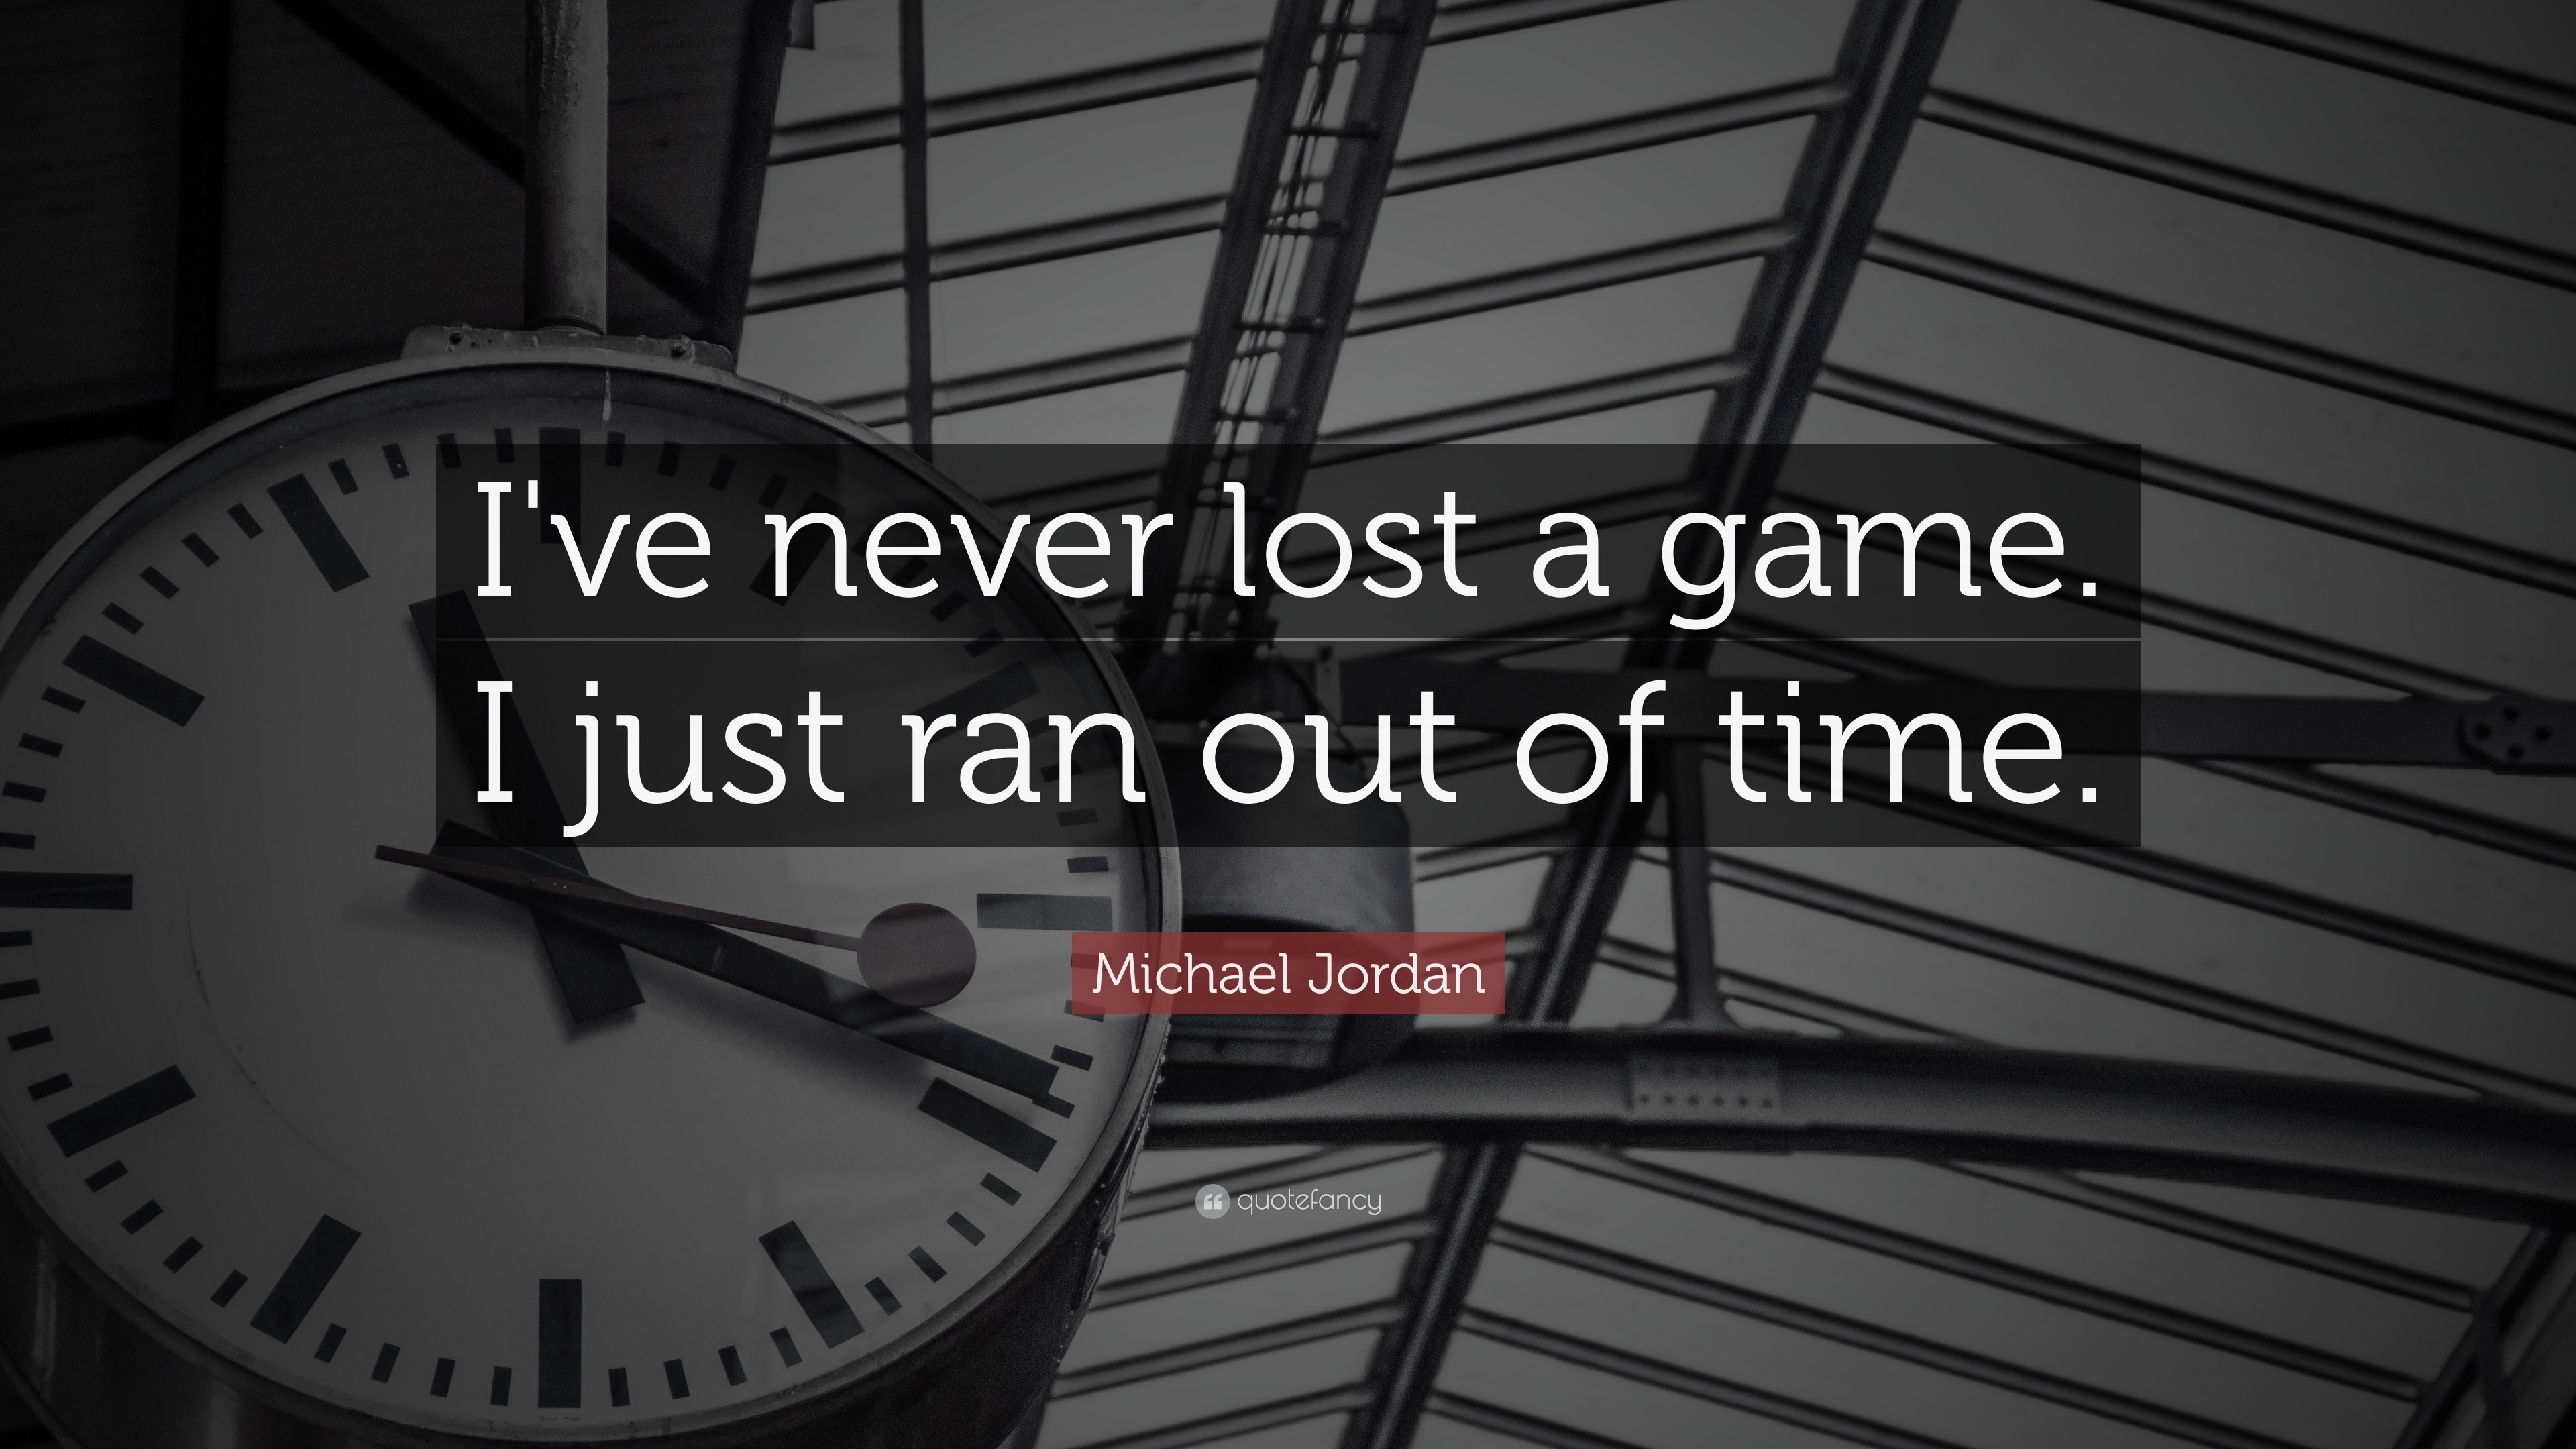 3840x2160 Michael Jordan Quote: “I've never lost a game. I just ran